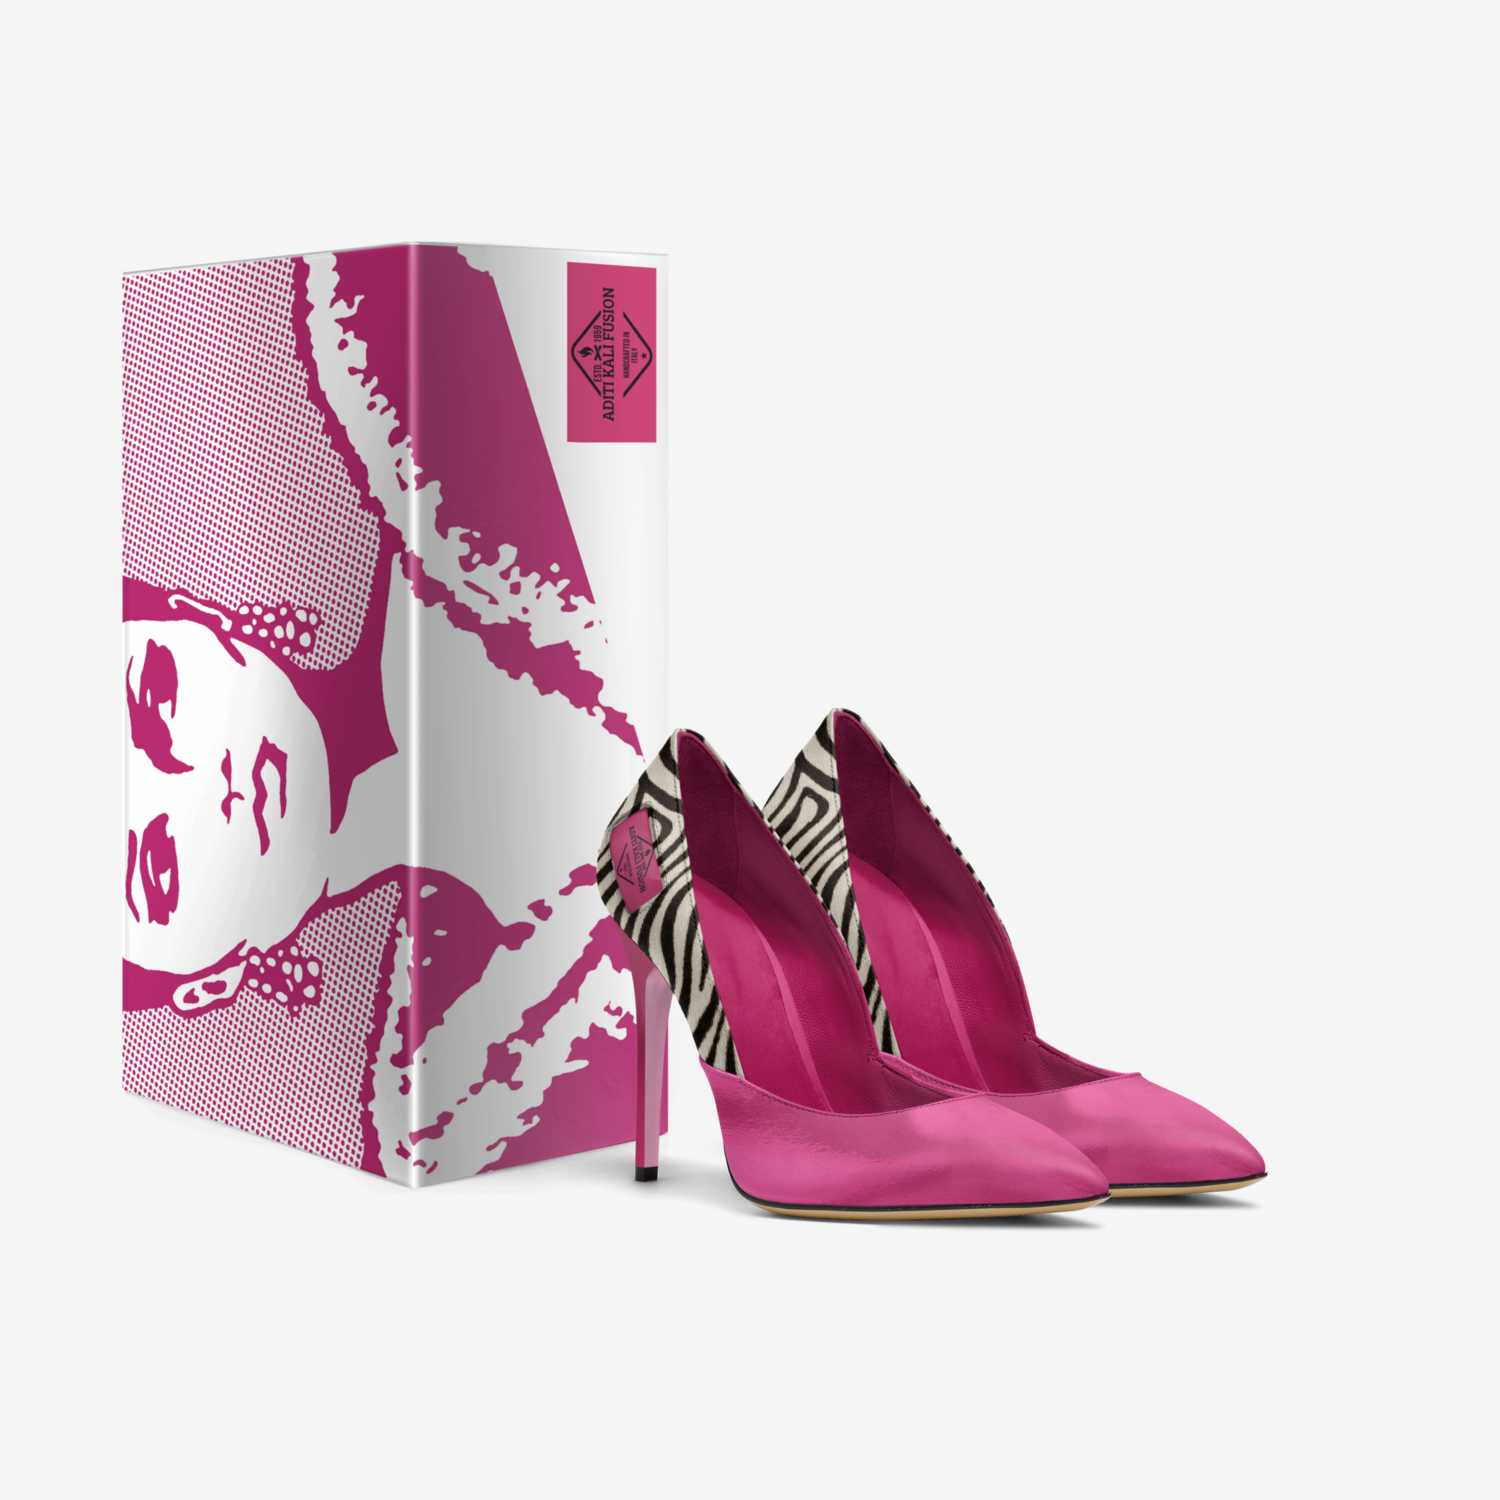 ADITI KALI FUSION custom made in Italy shoes by Aditi-kali Of Wonkey Donkey Bazaar | Box view